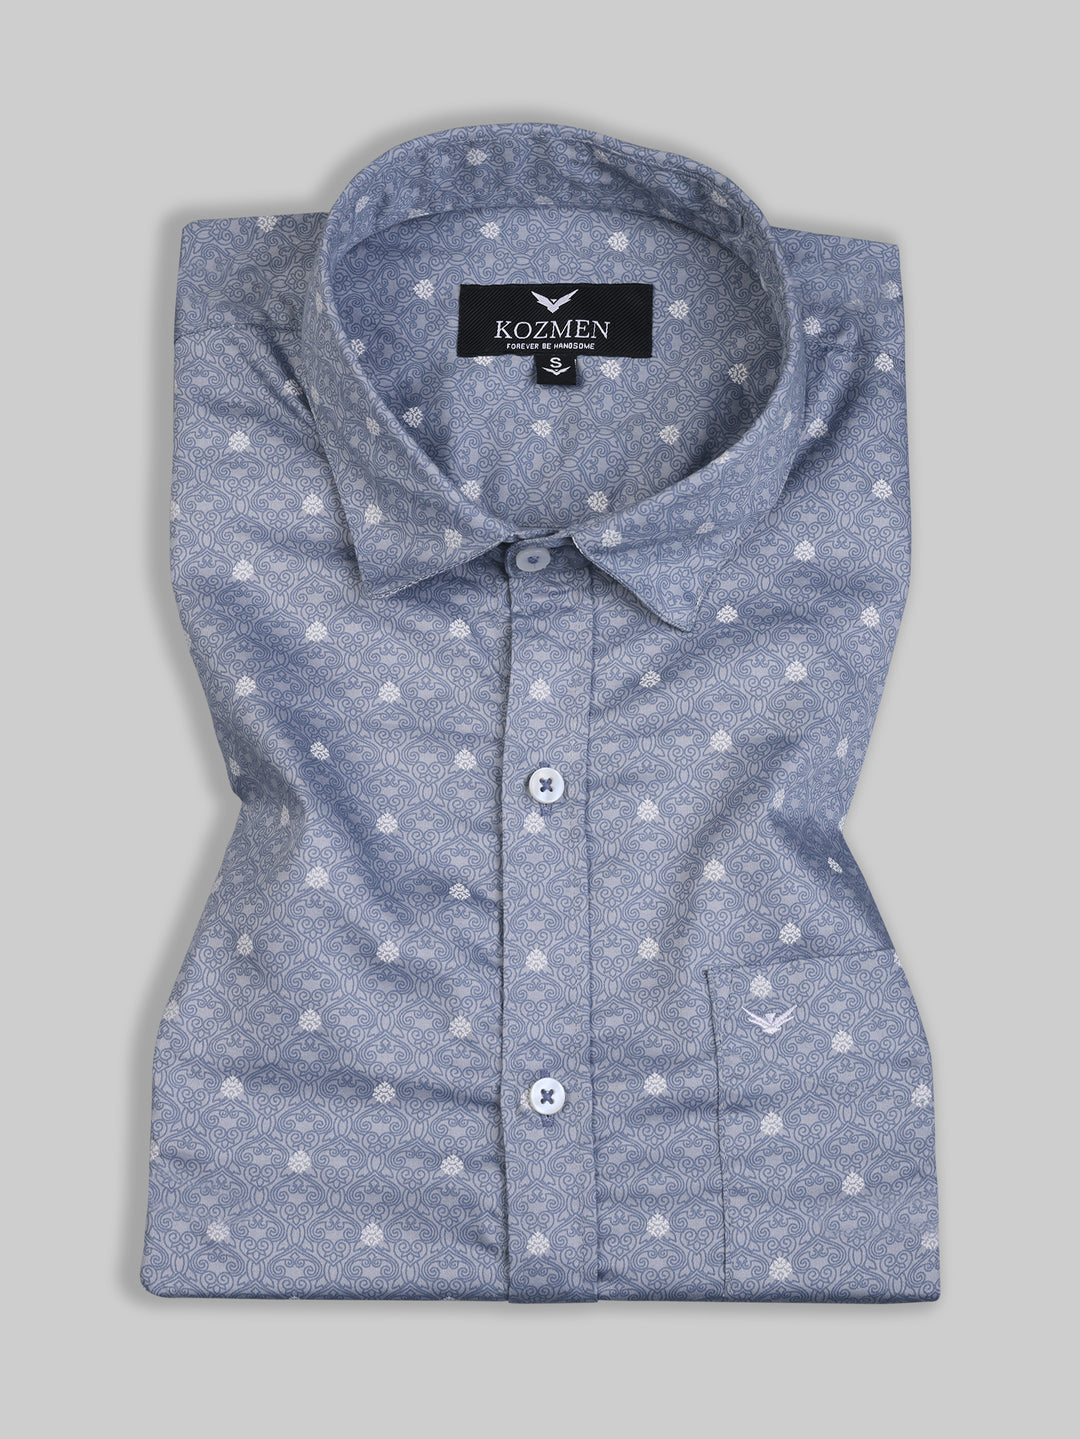 Damask Print Light Blue & Gray Cotton Shirt